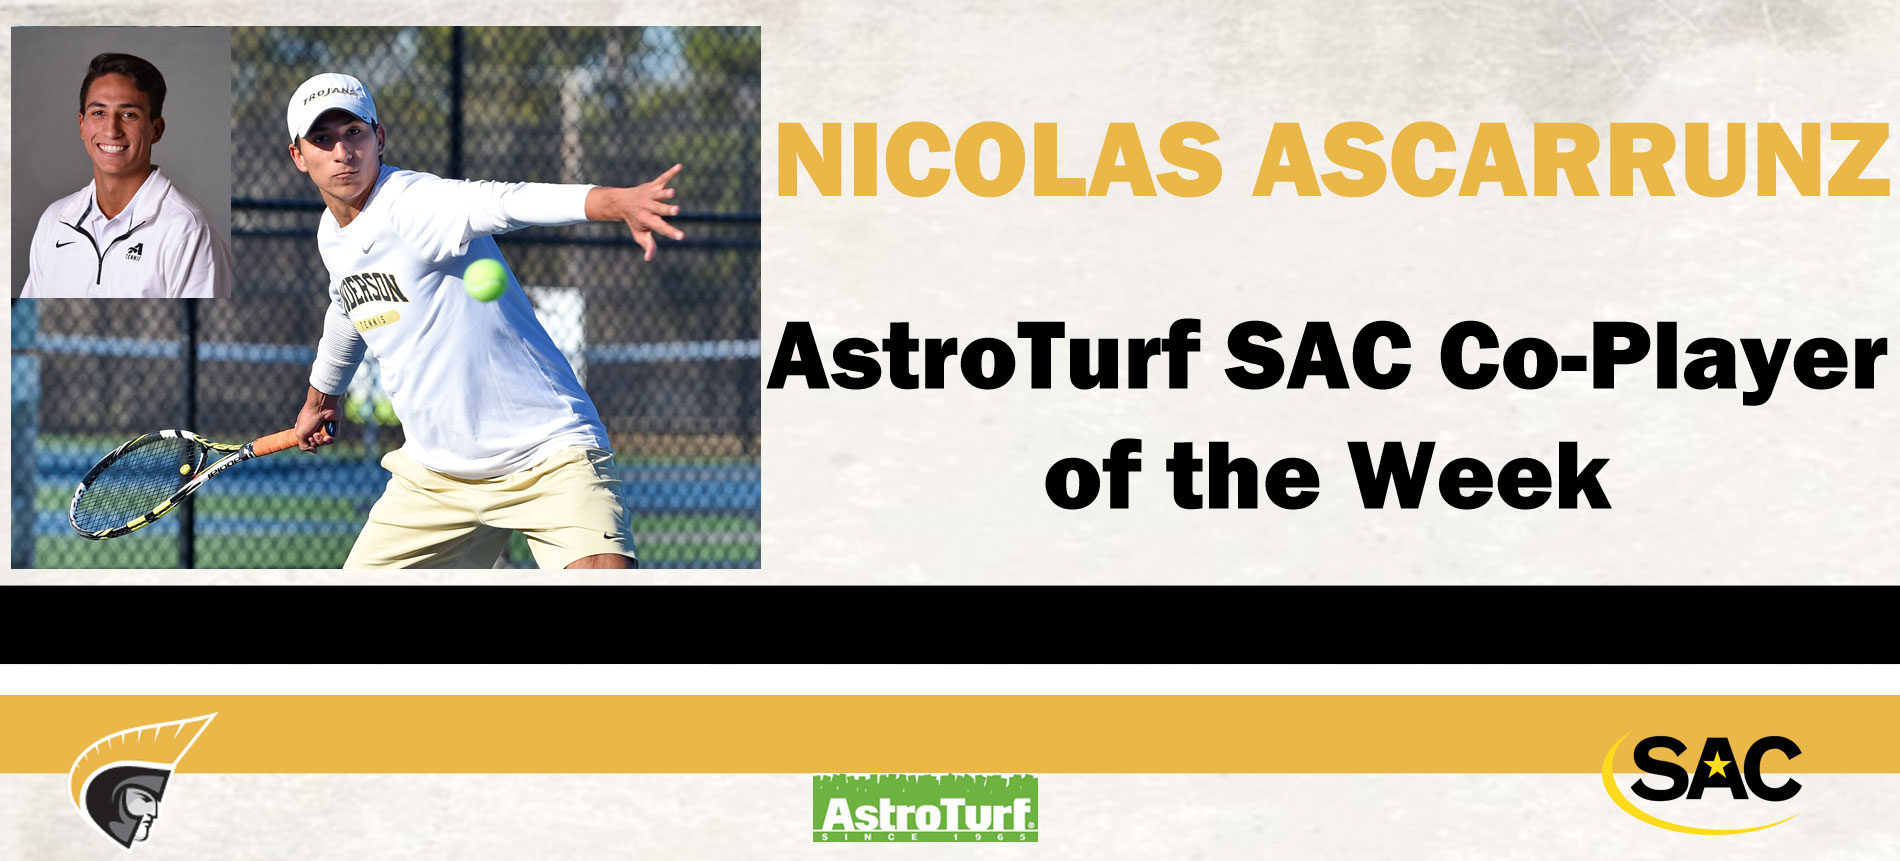 Ascarrunz Earns AstroTurf Men’s Tennis Co-Player of the Week Honors